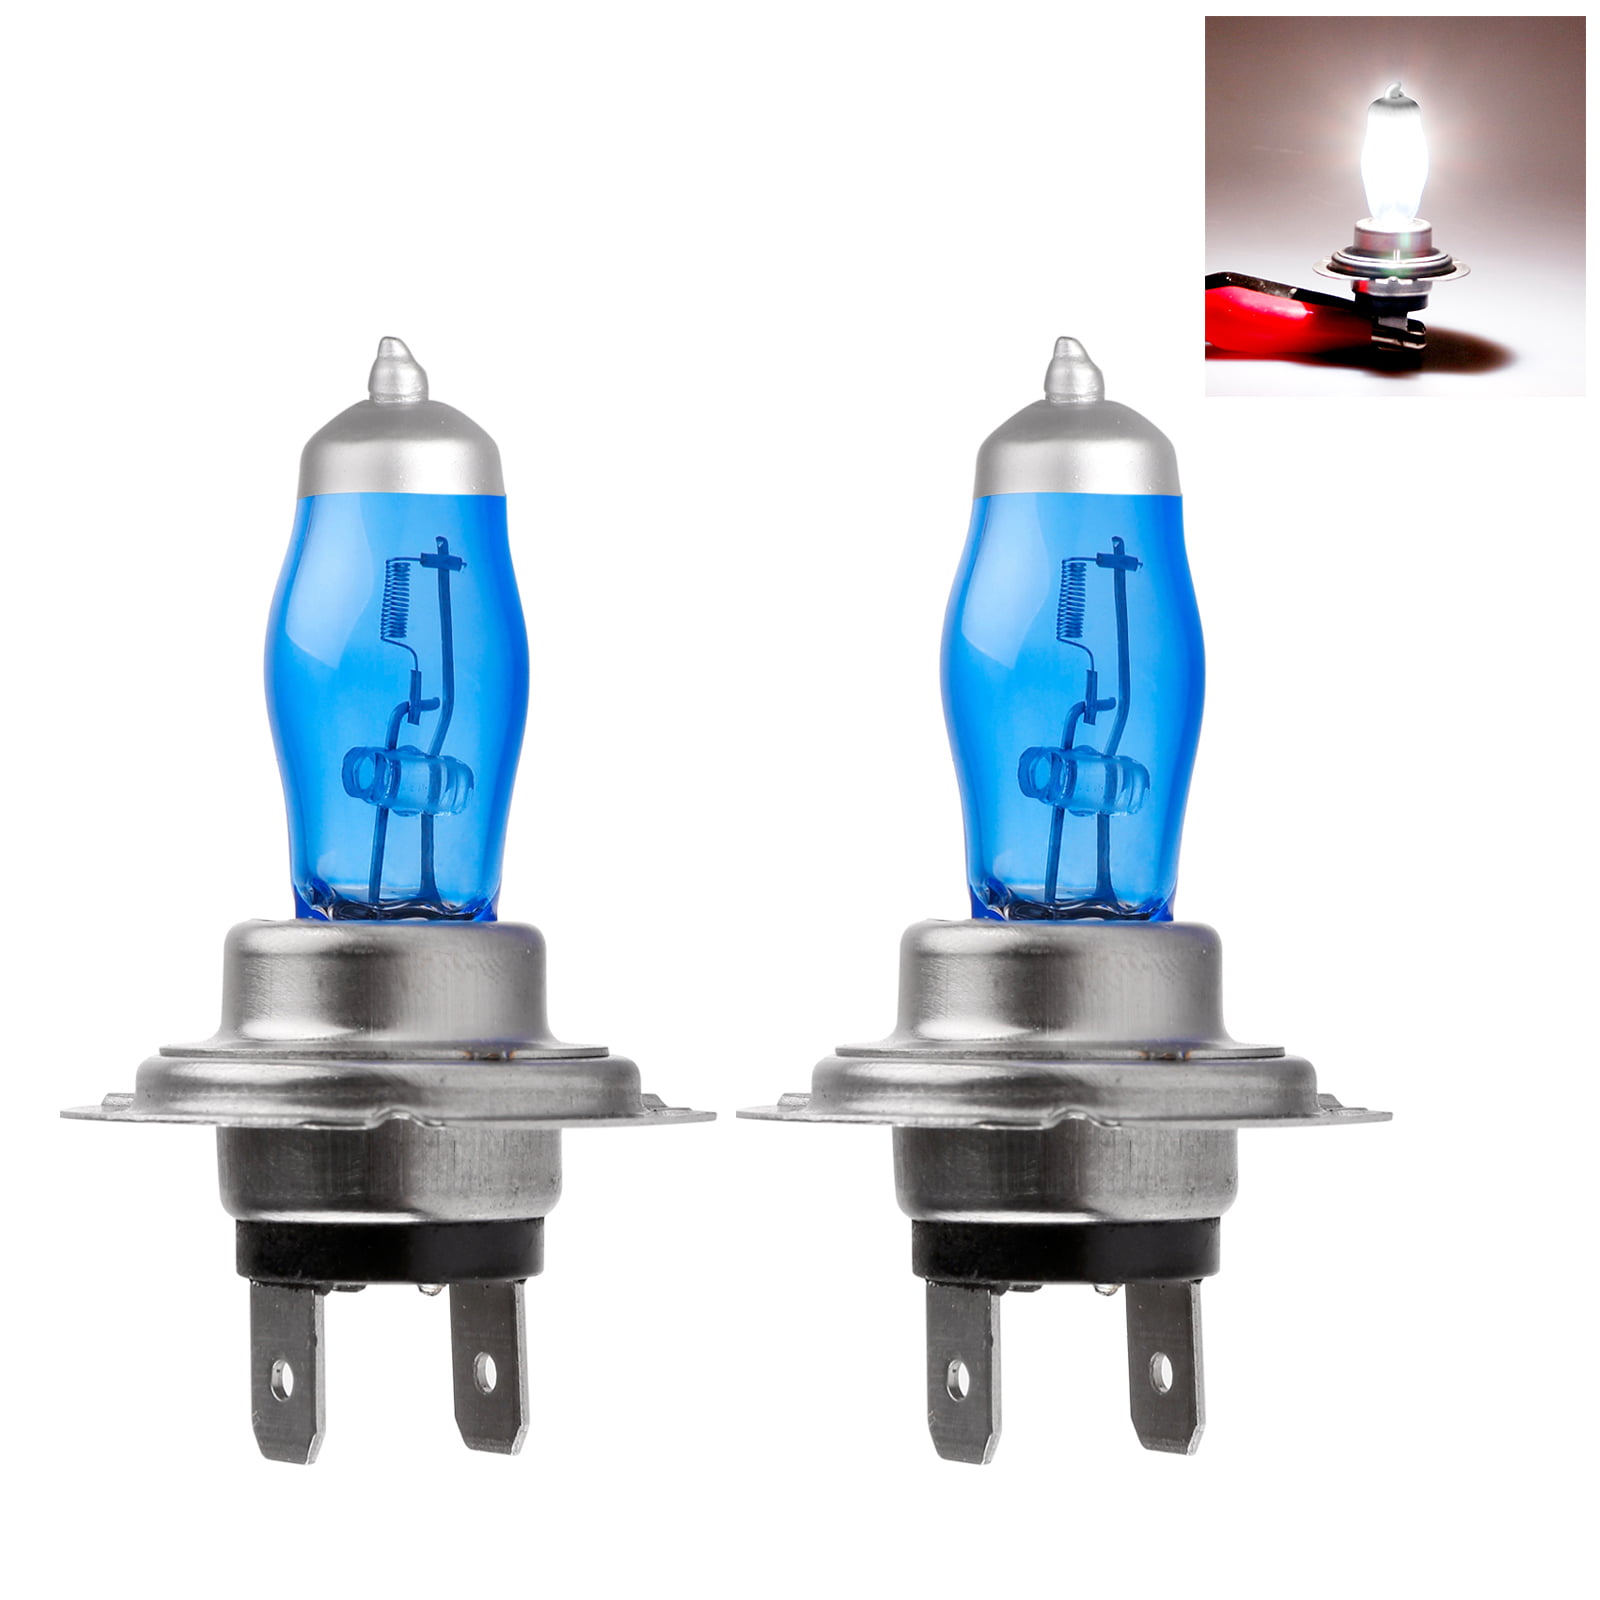 2pcs Auto Car H7 HID 12V 55W Xenon Super White Headlight Halogen Bulbs Lamp